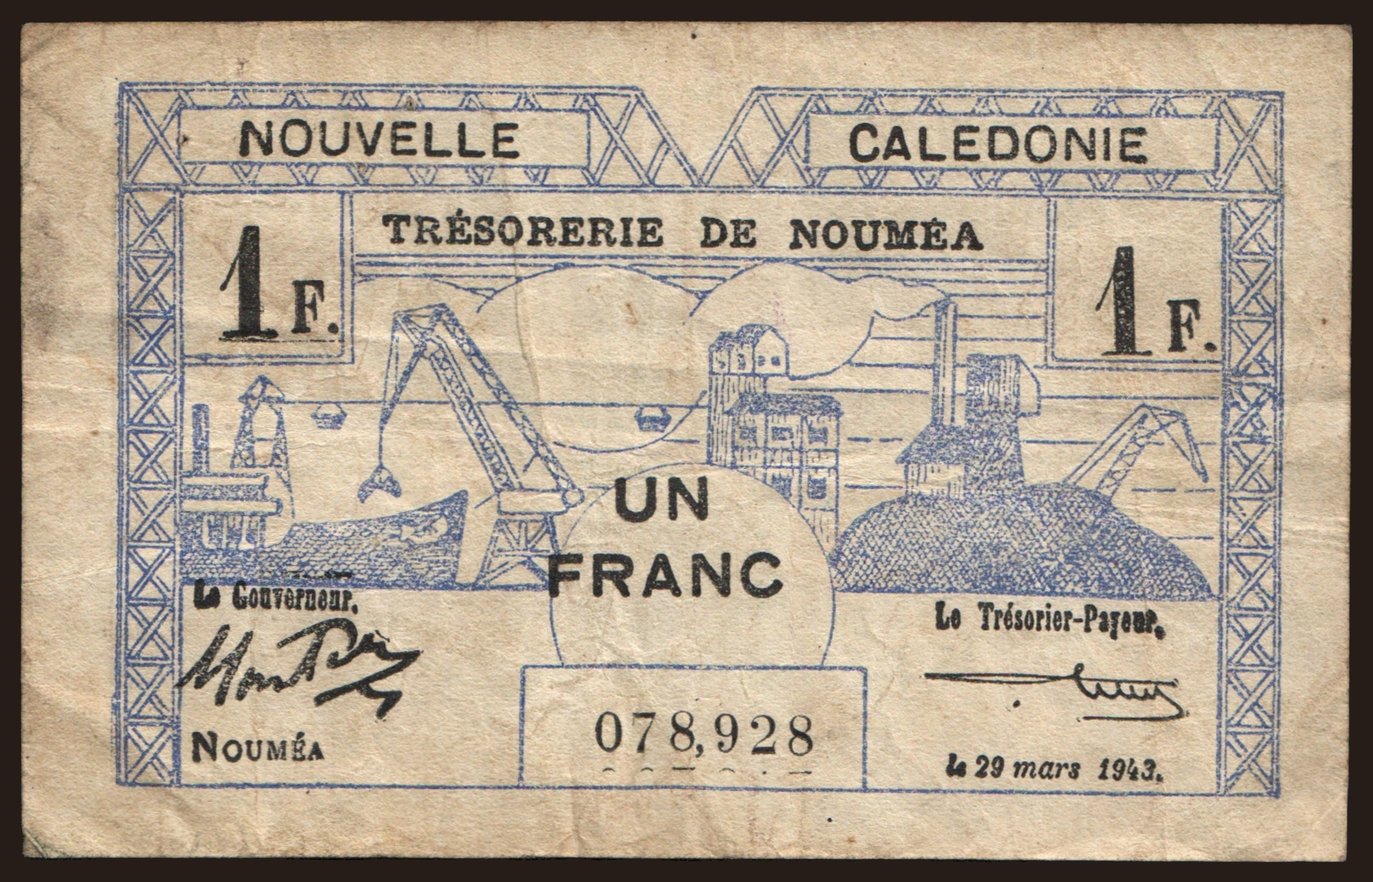 1 franc, 1943